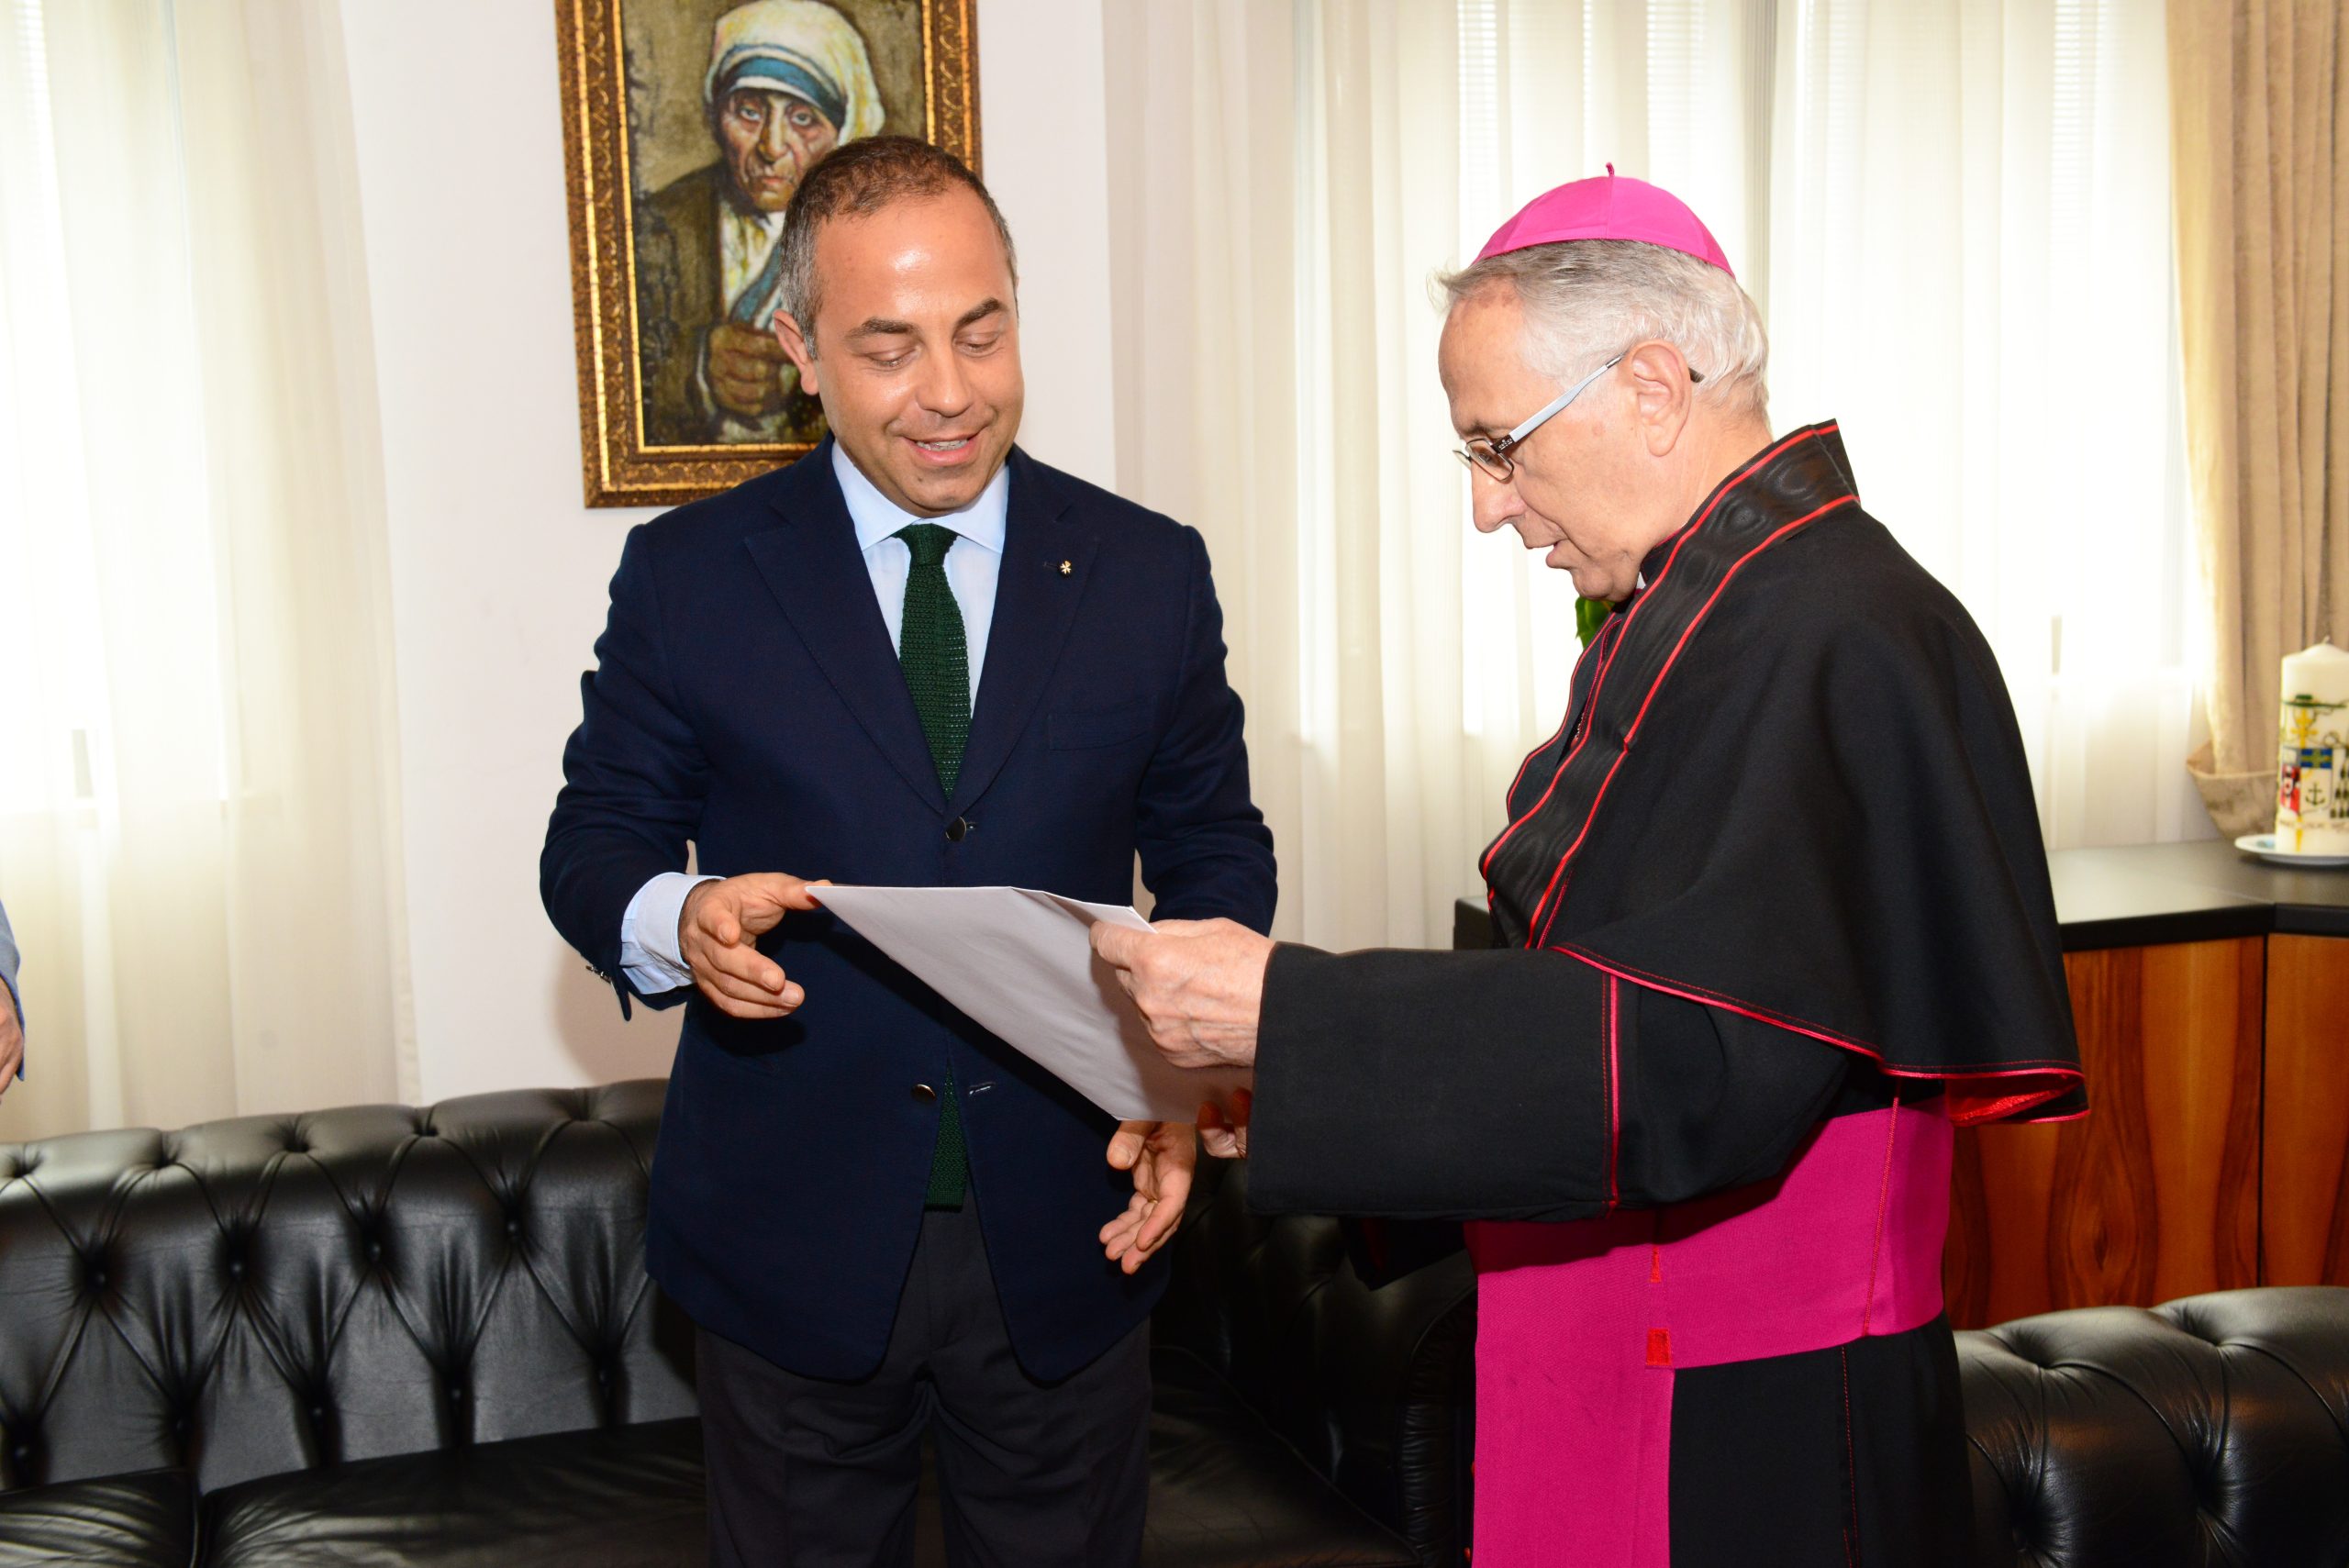 Ambassador conferred high honours on two high prelates, Monsignor Mirdita and Avgustini